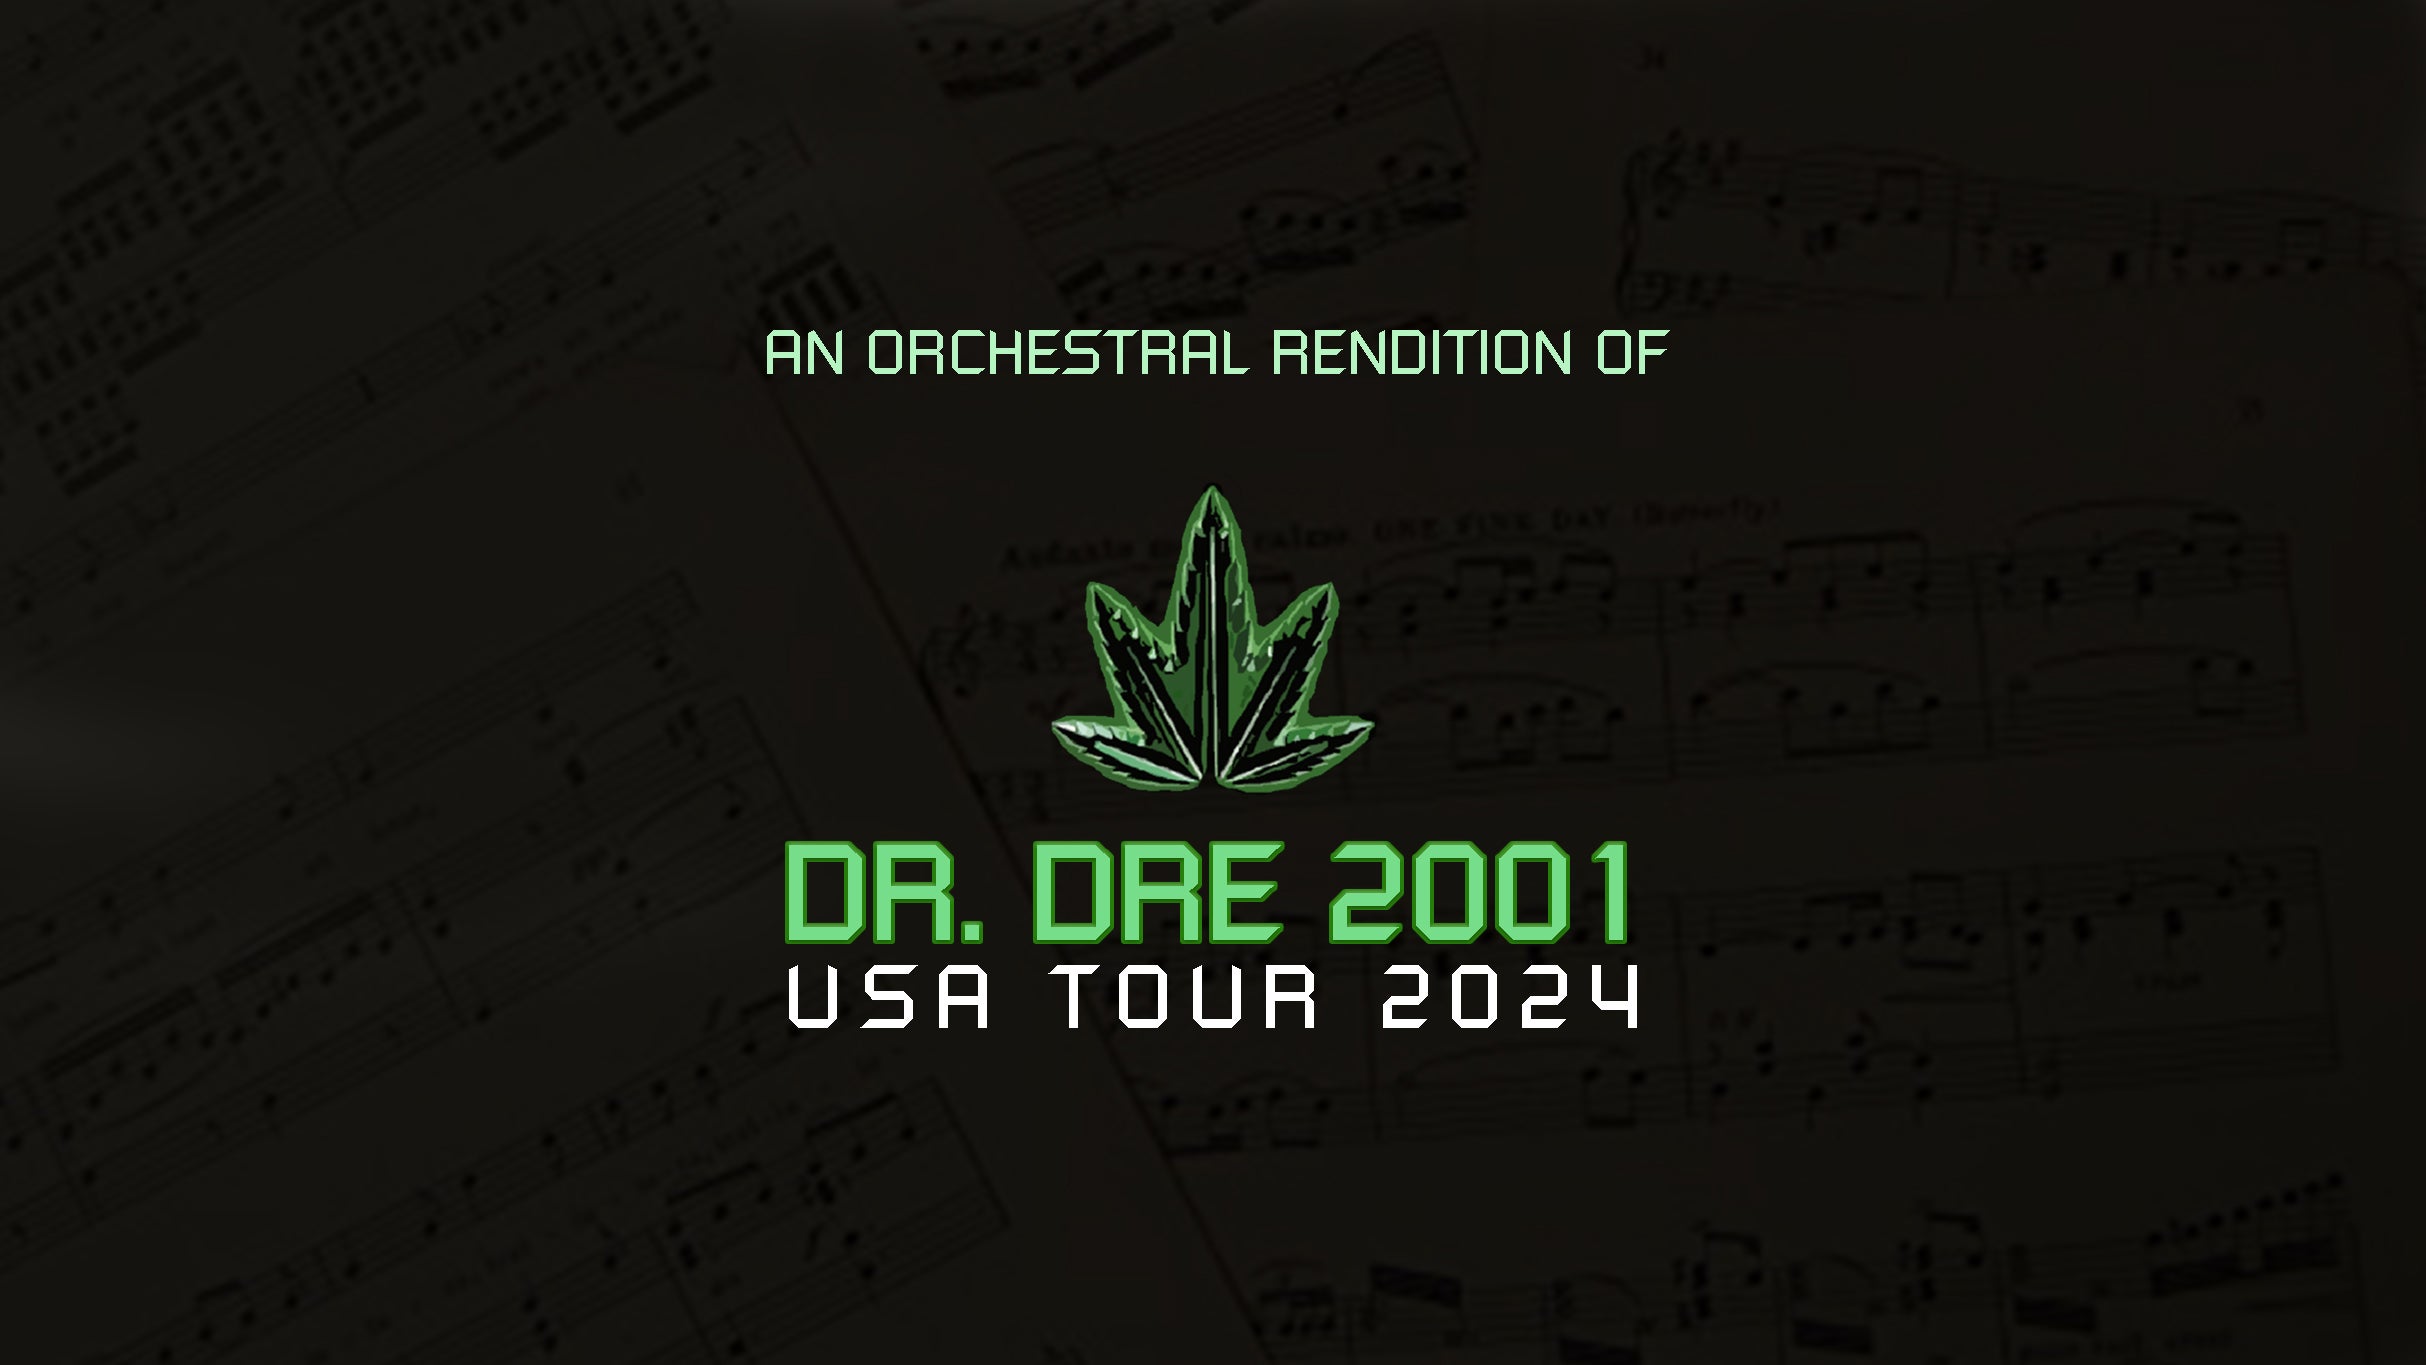 An Orchestral Rendition of Dr Dre 2001 at Britt Pavilion